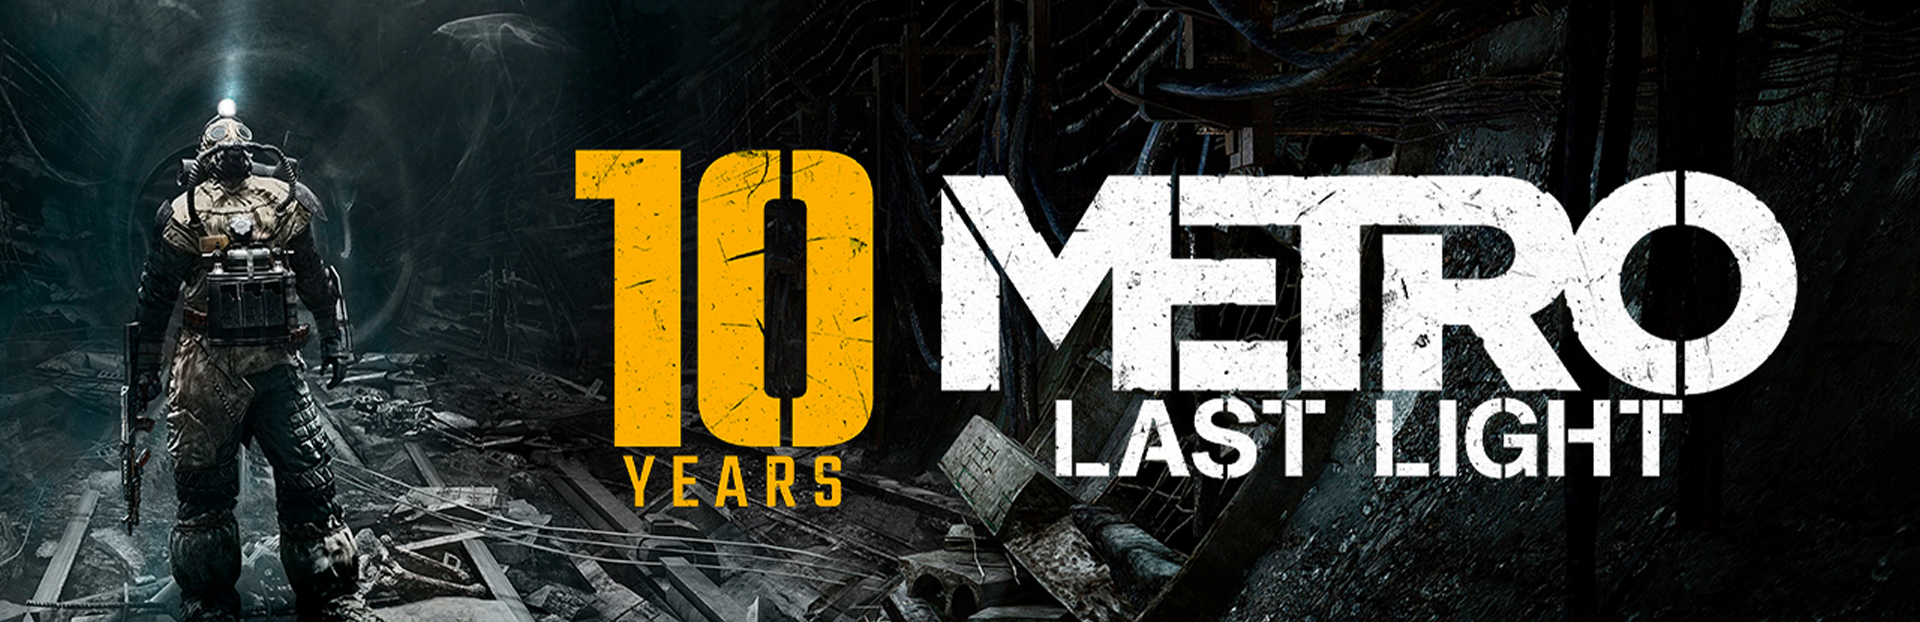 Darmowa gra na Steamie. Metro: Last Light świętuje 10 lat